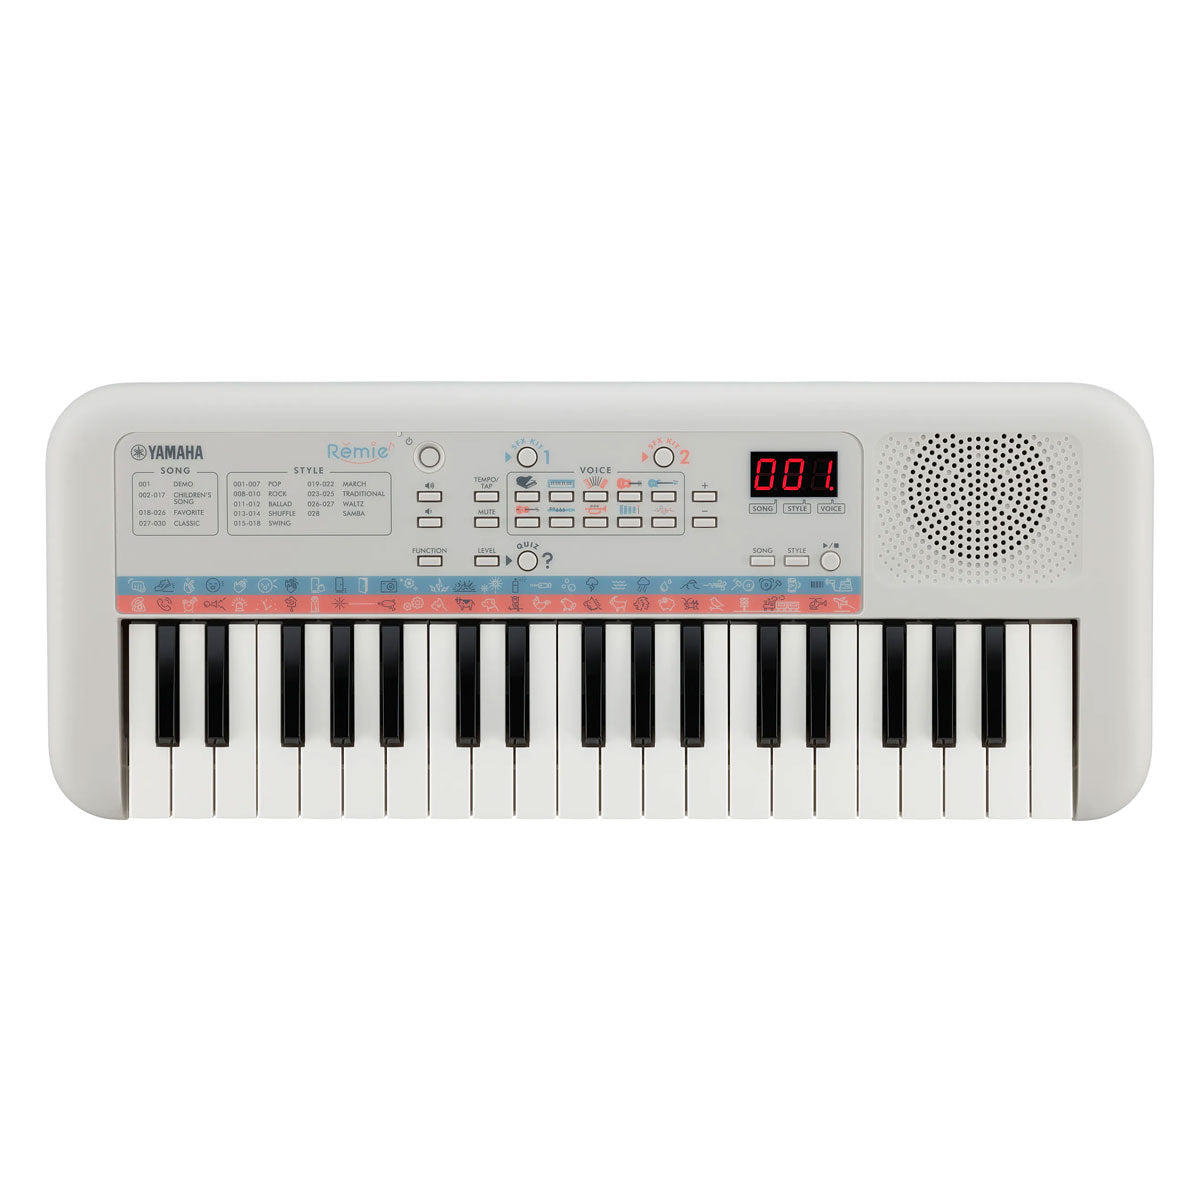 Yamaha Remie PSS-E30 Portable Mini-Keyboard